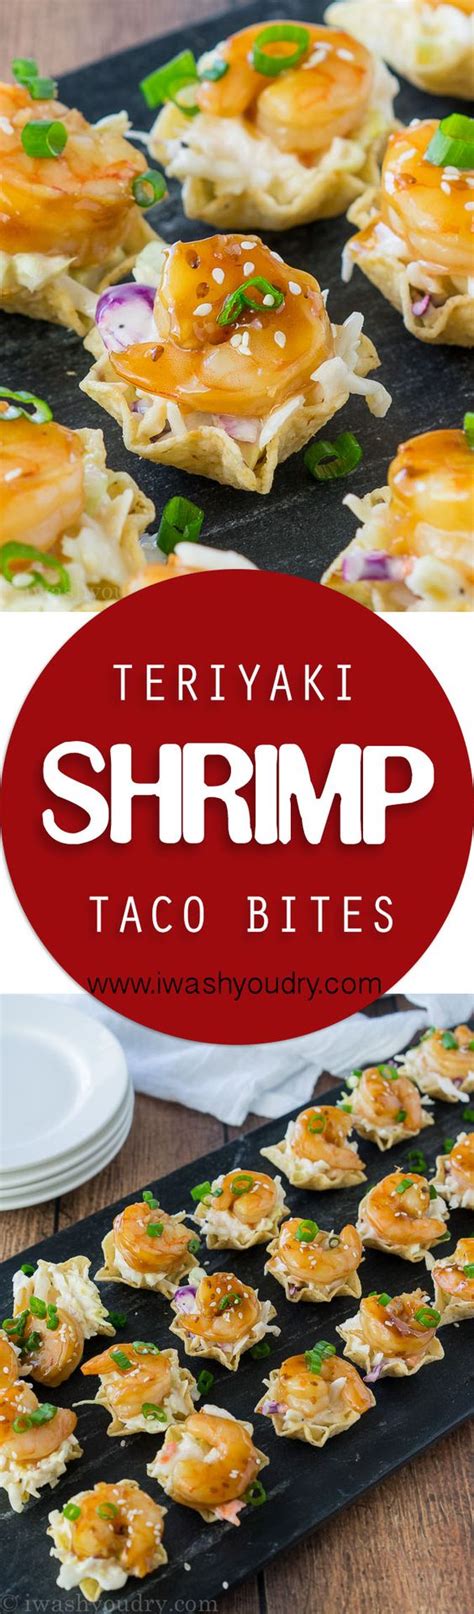 Teriyaki Shrimp Taco Bites Recipe Diy Food Recipes Taco Bites Diy